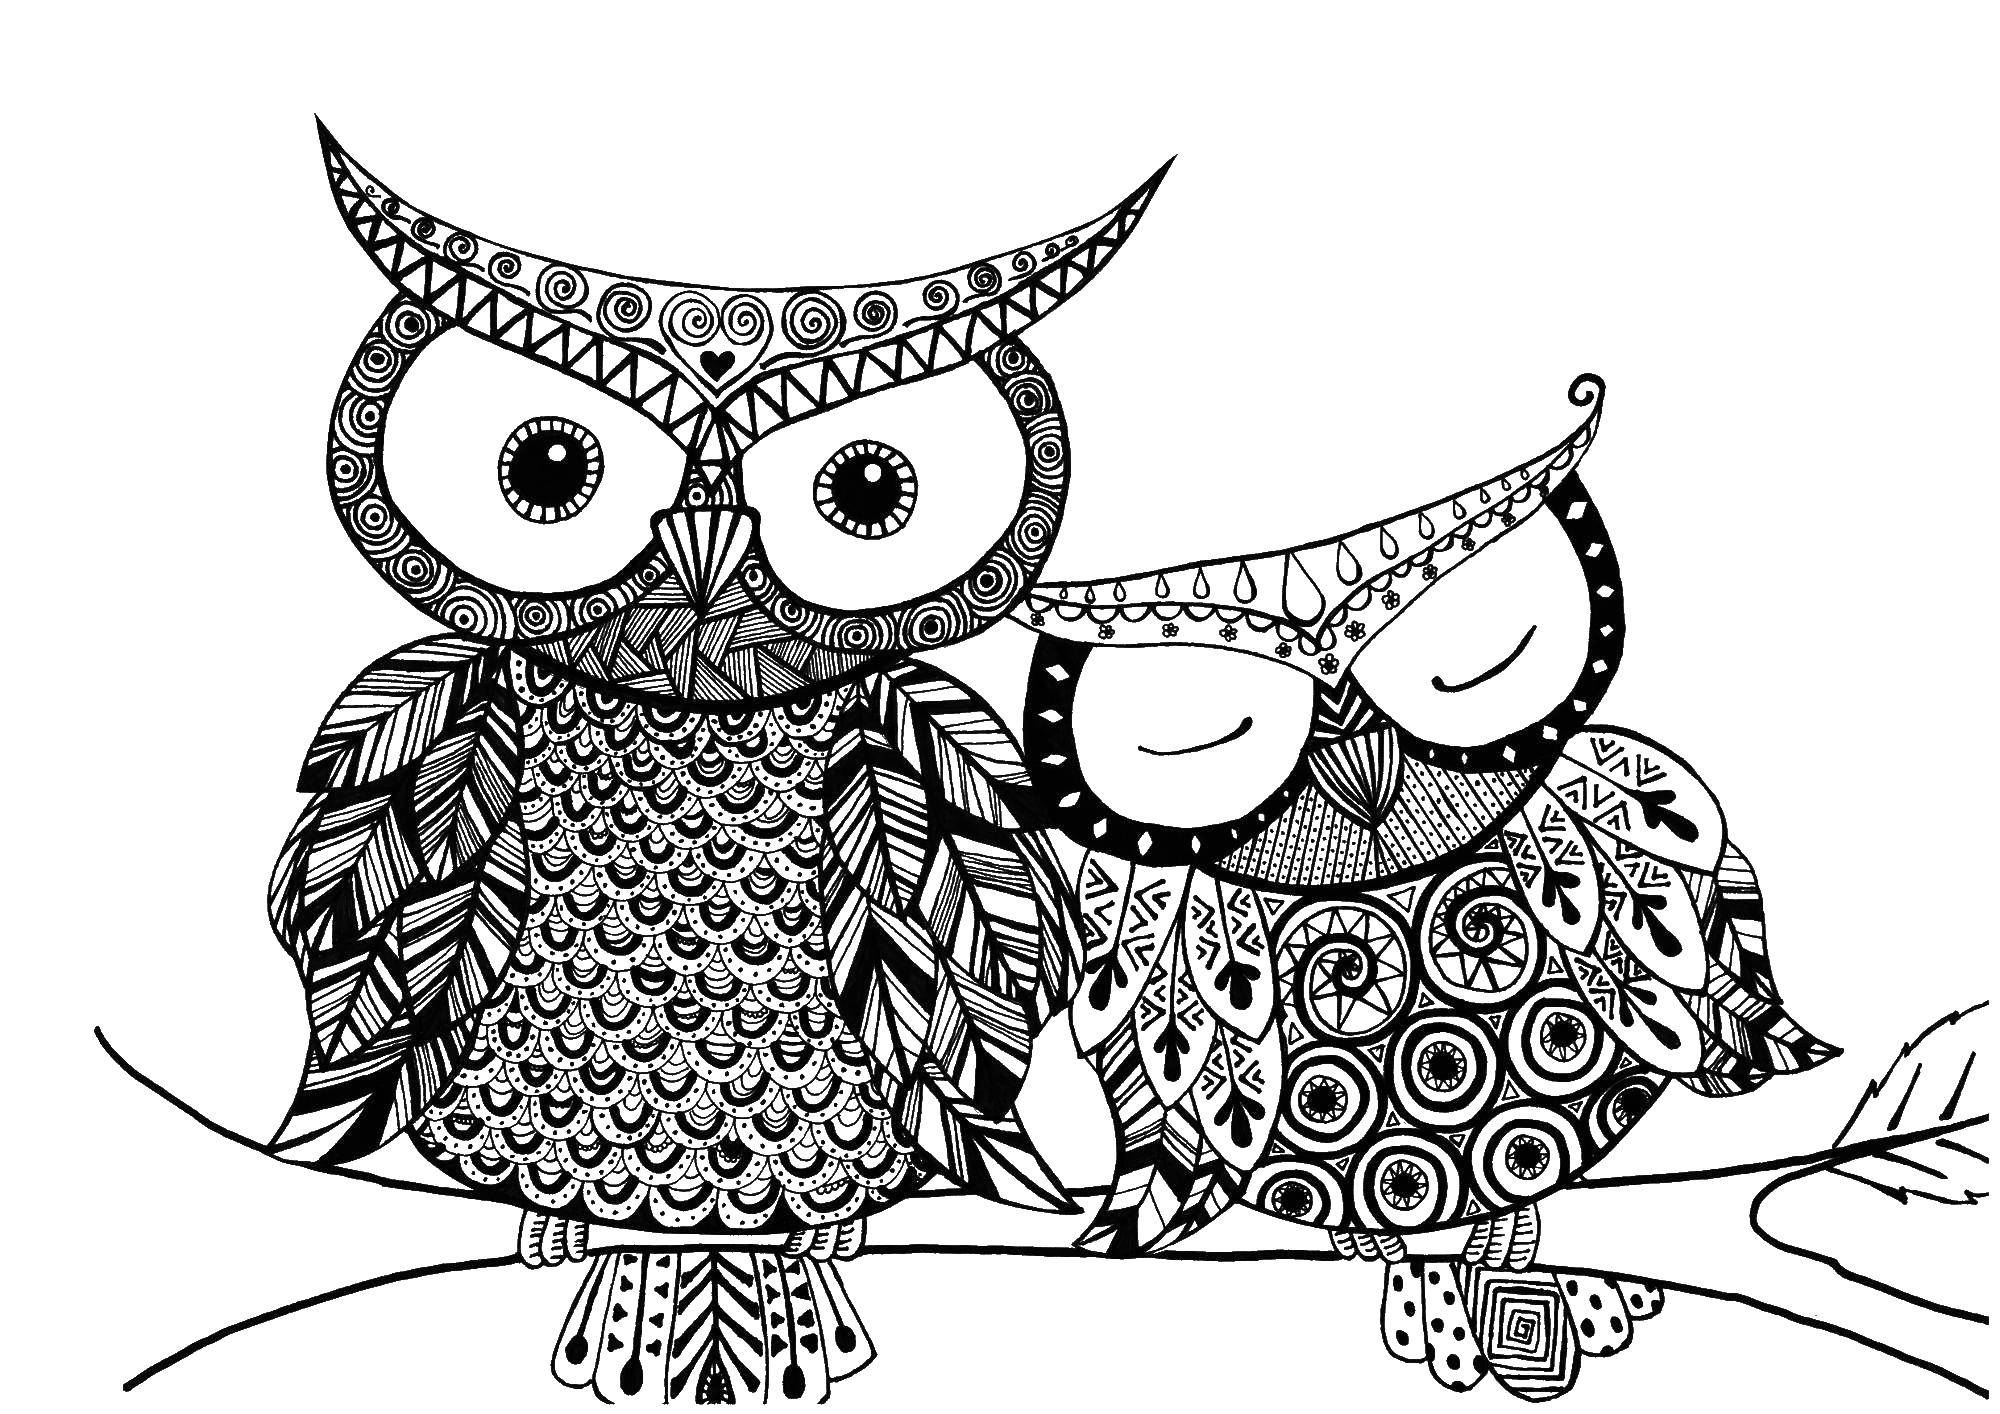 Coloring Owls hugging. Category night birds. Tags:  owl, bird.